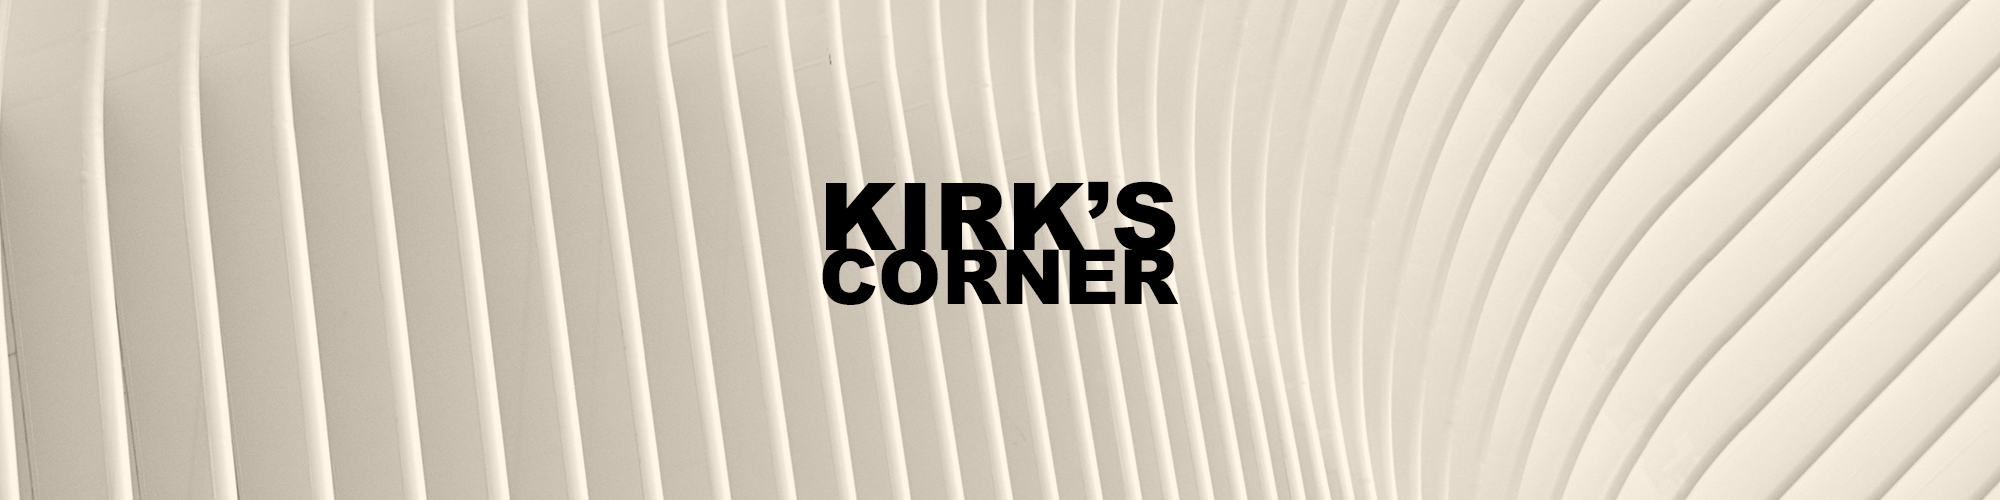 Kirk's Corner 006: 'Funky Kings' Album Review